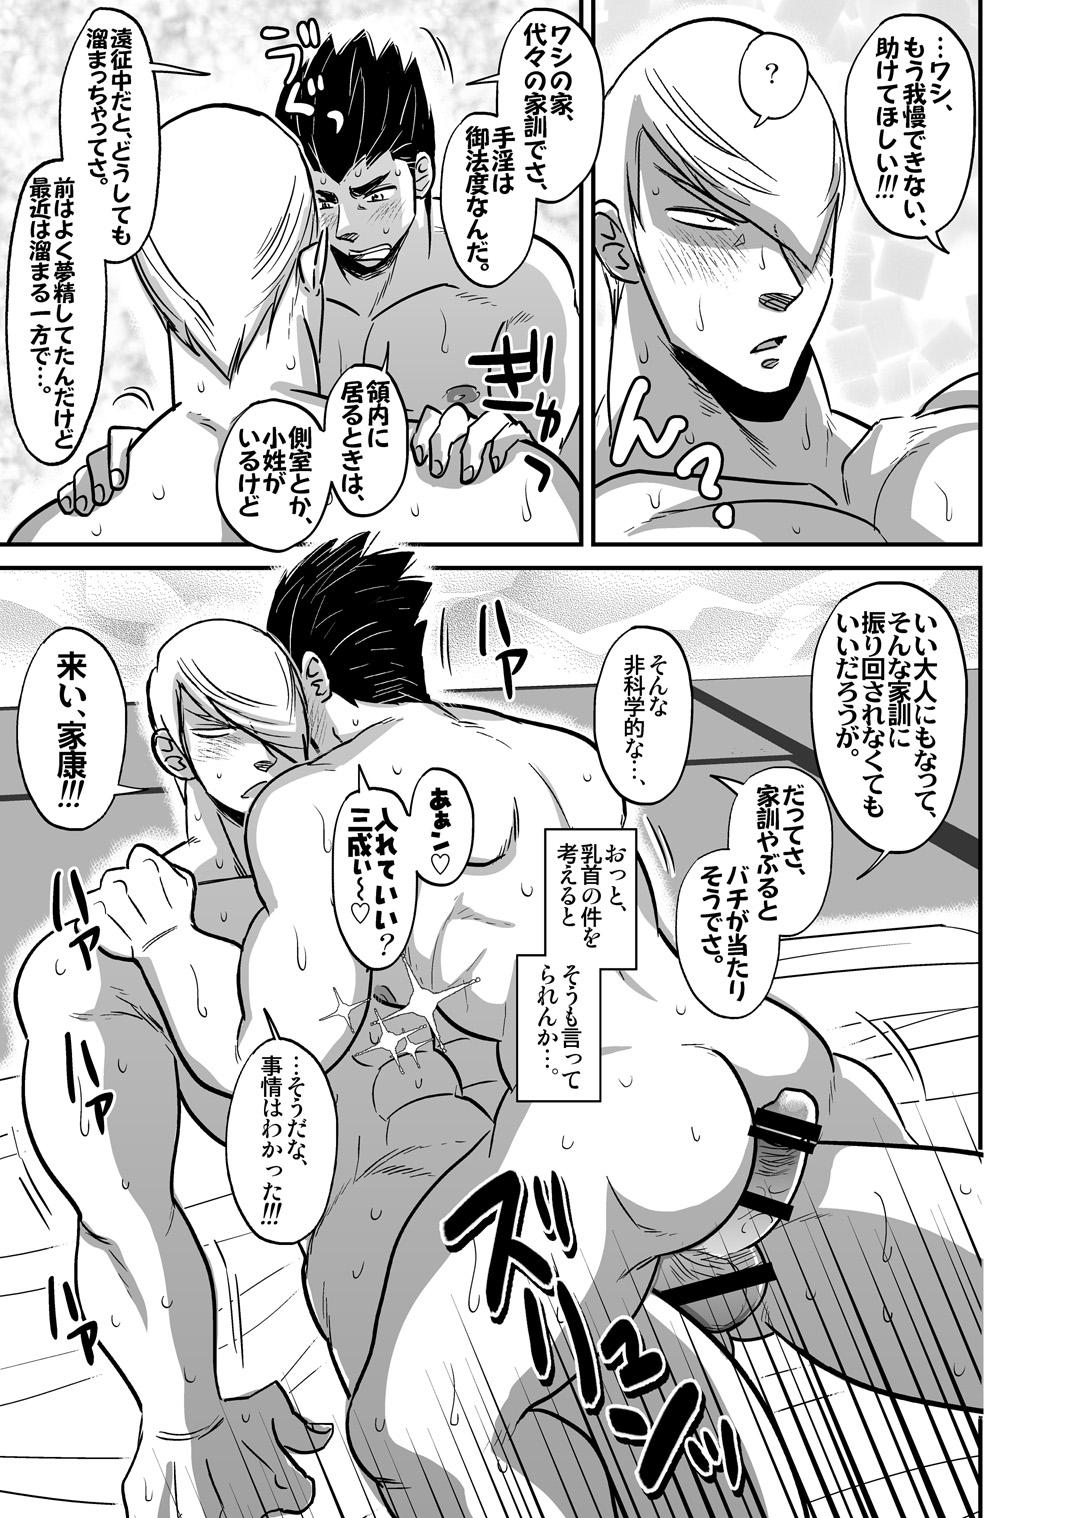 Piercings Multi-HOMO manga at home - Sengoku basara Hood - Page 10